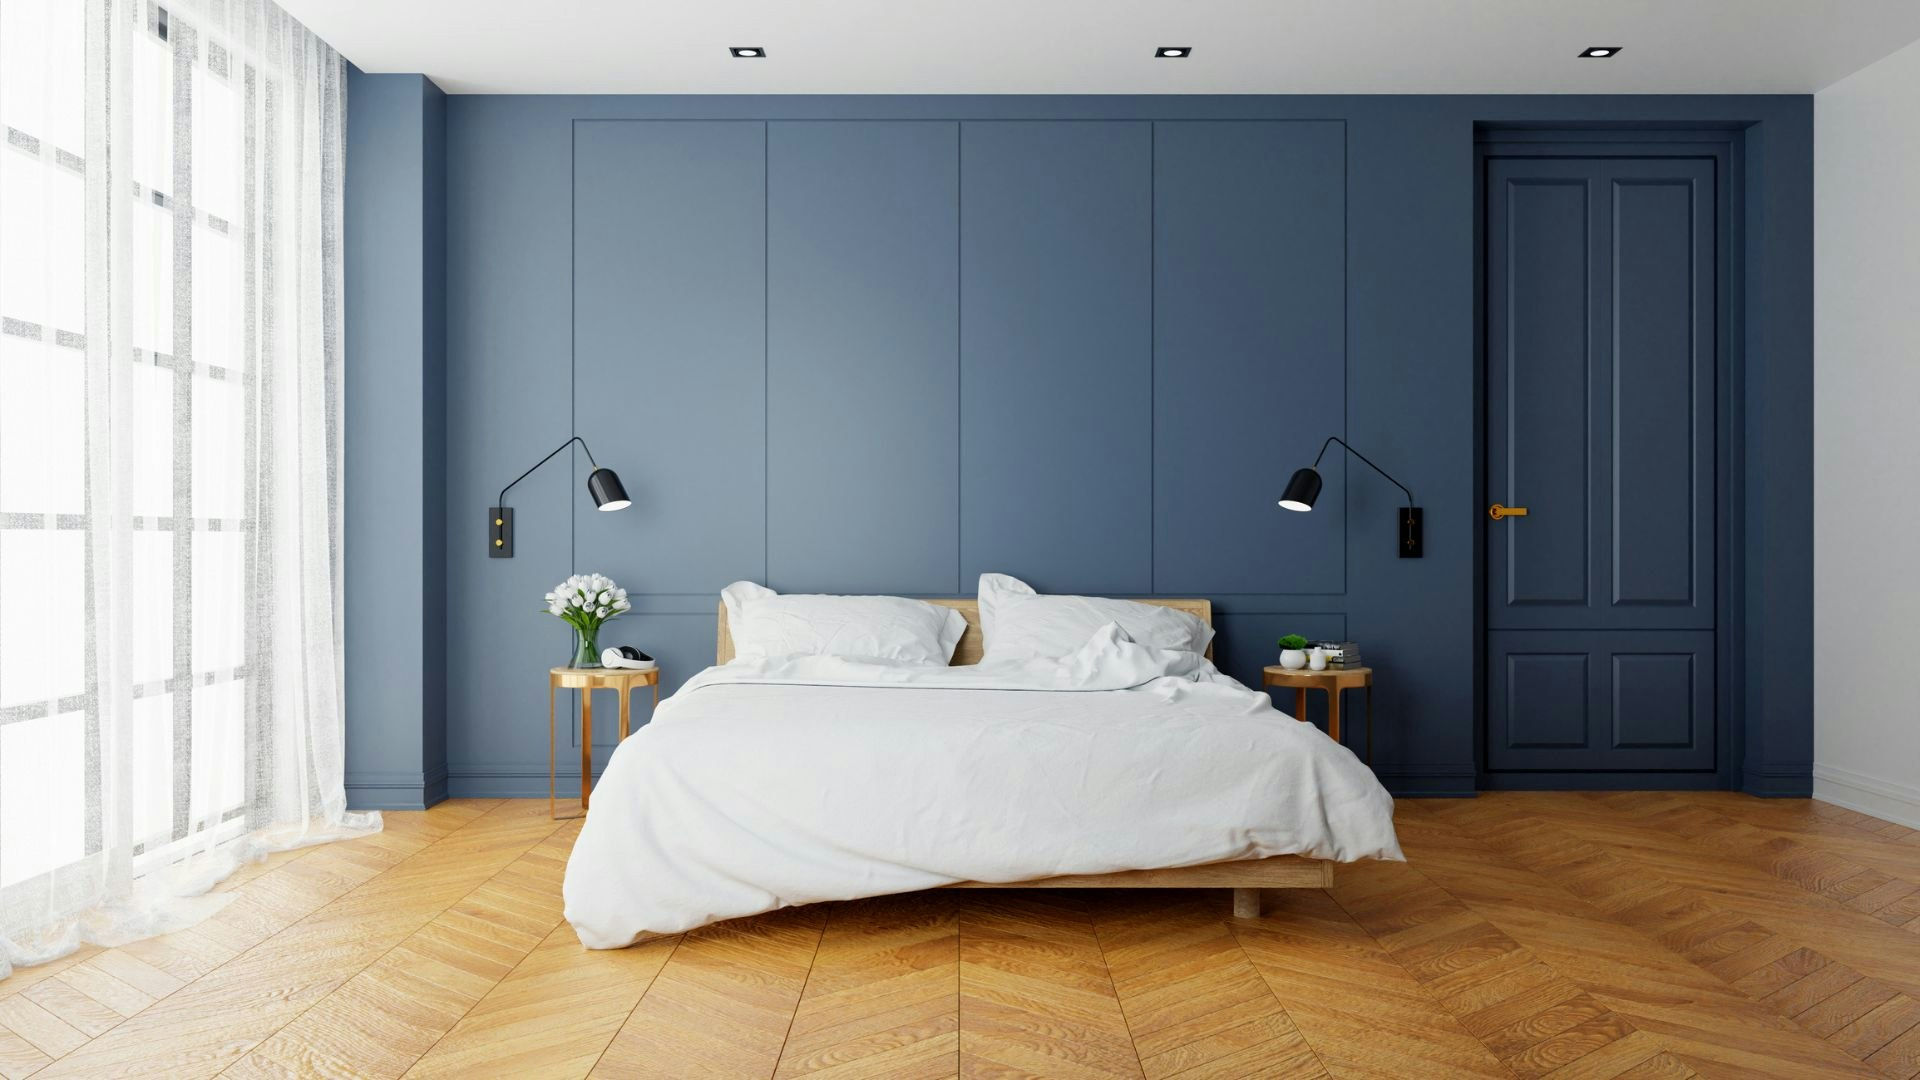 Navy bedroom ideas: Paint everything navy, including the door